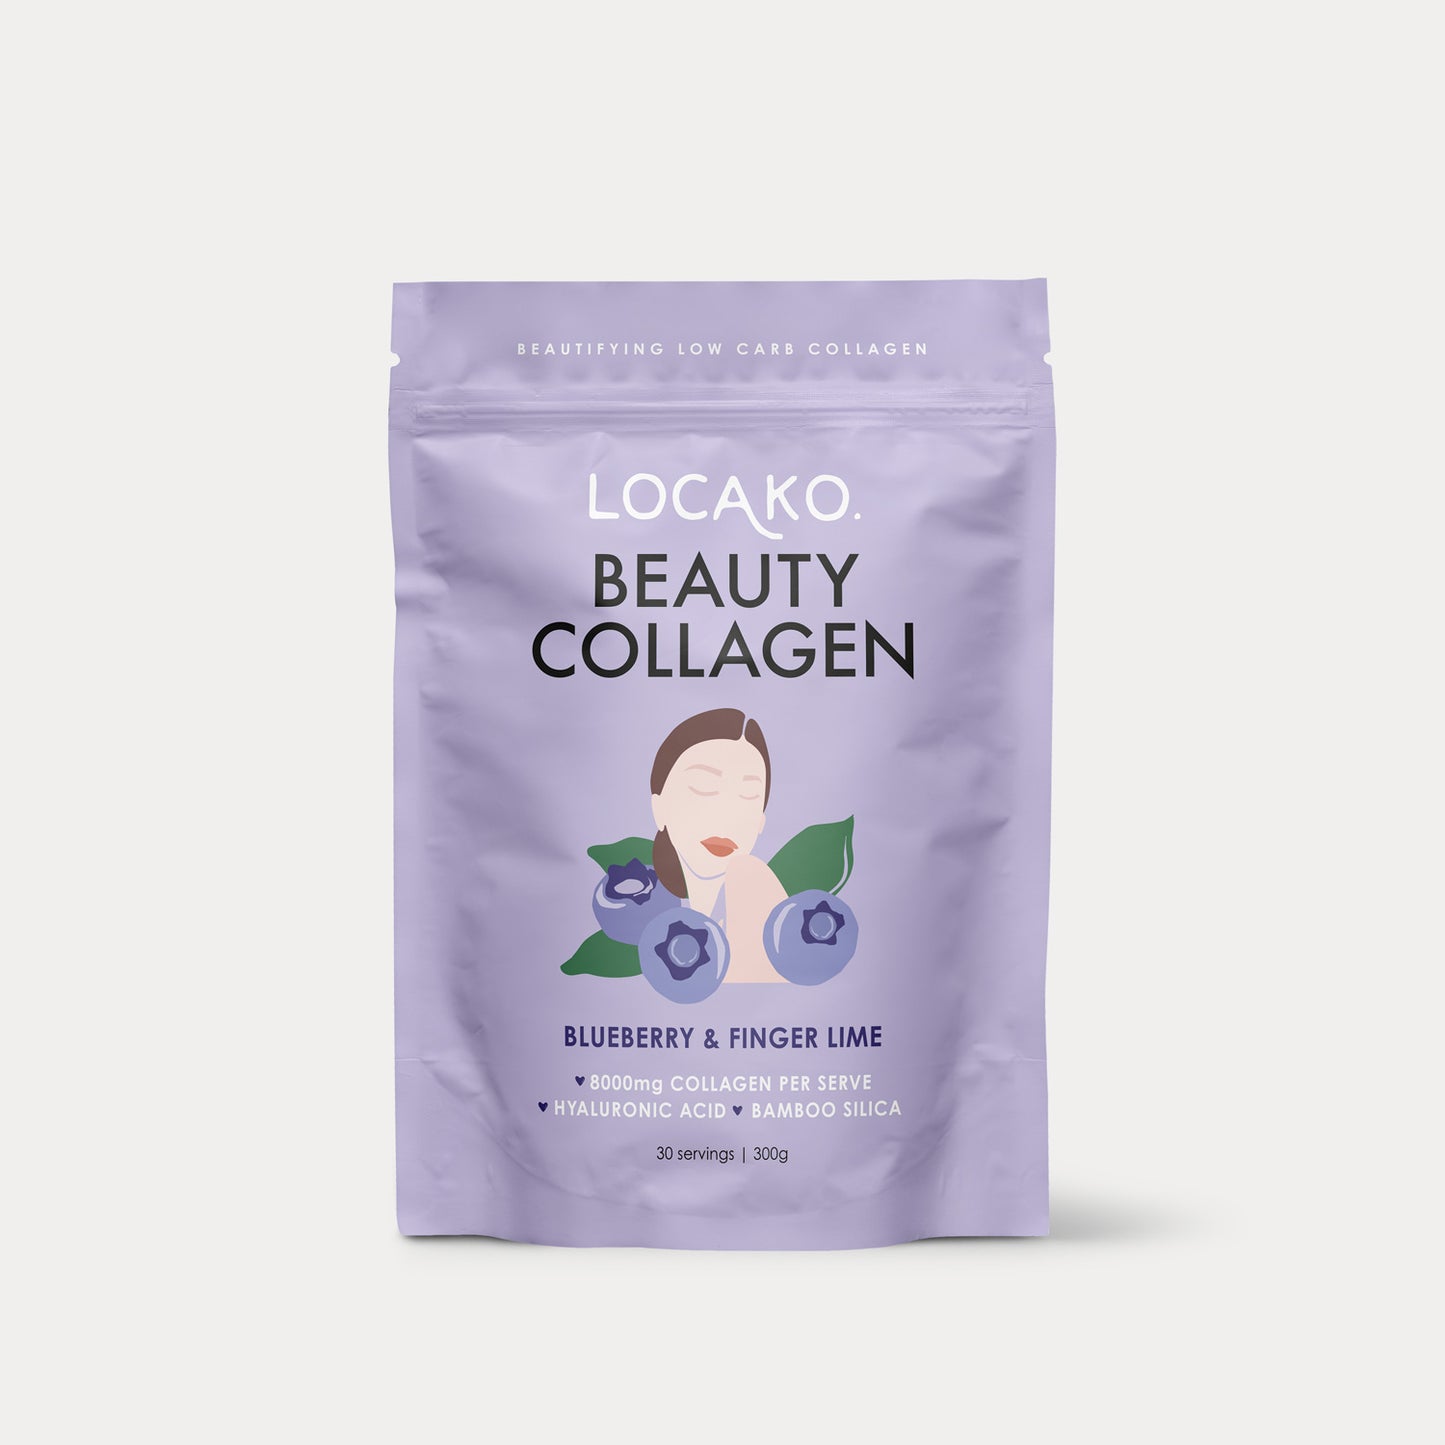 Locako Beauty Collagen - Blueberry and Finger Lime - Locako